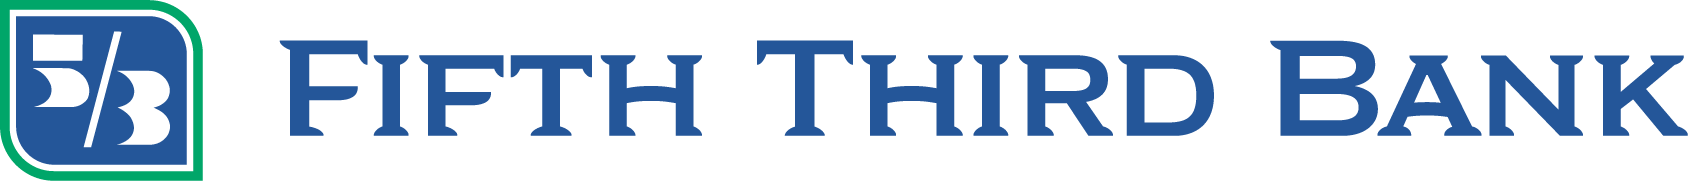 Fifth Third Bank, National Association company logo